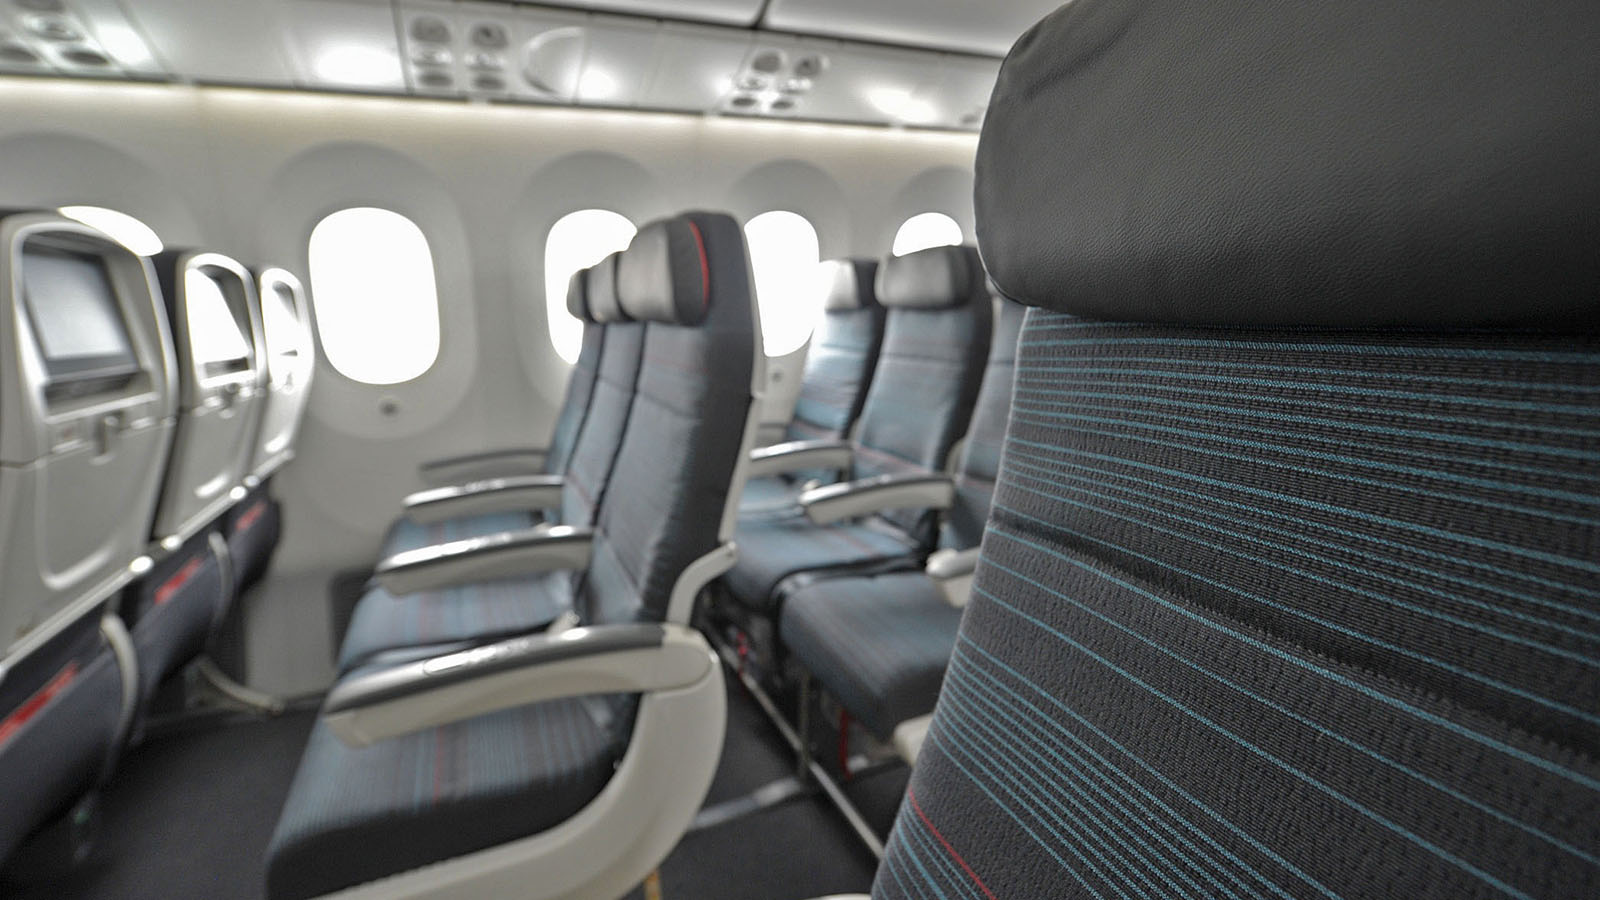 Air Canada Boeing 787 Economy